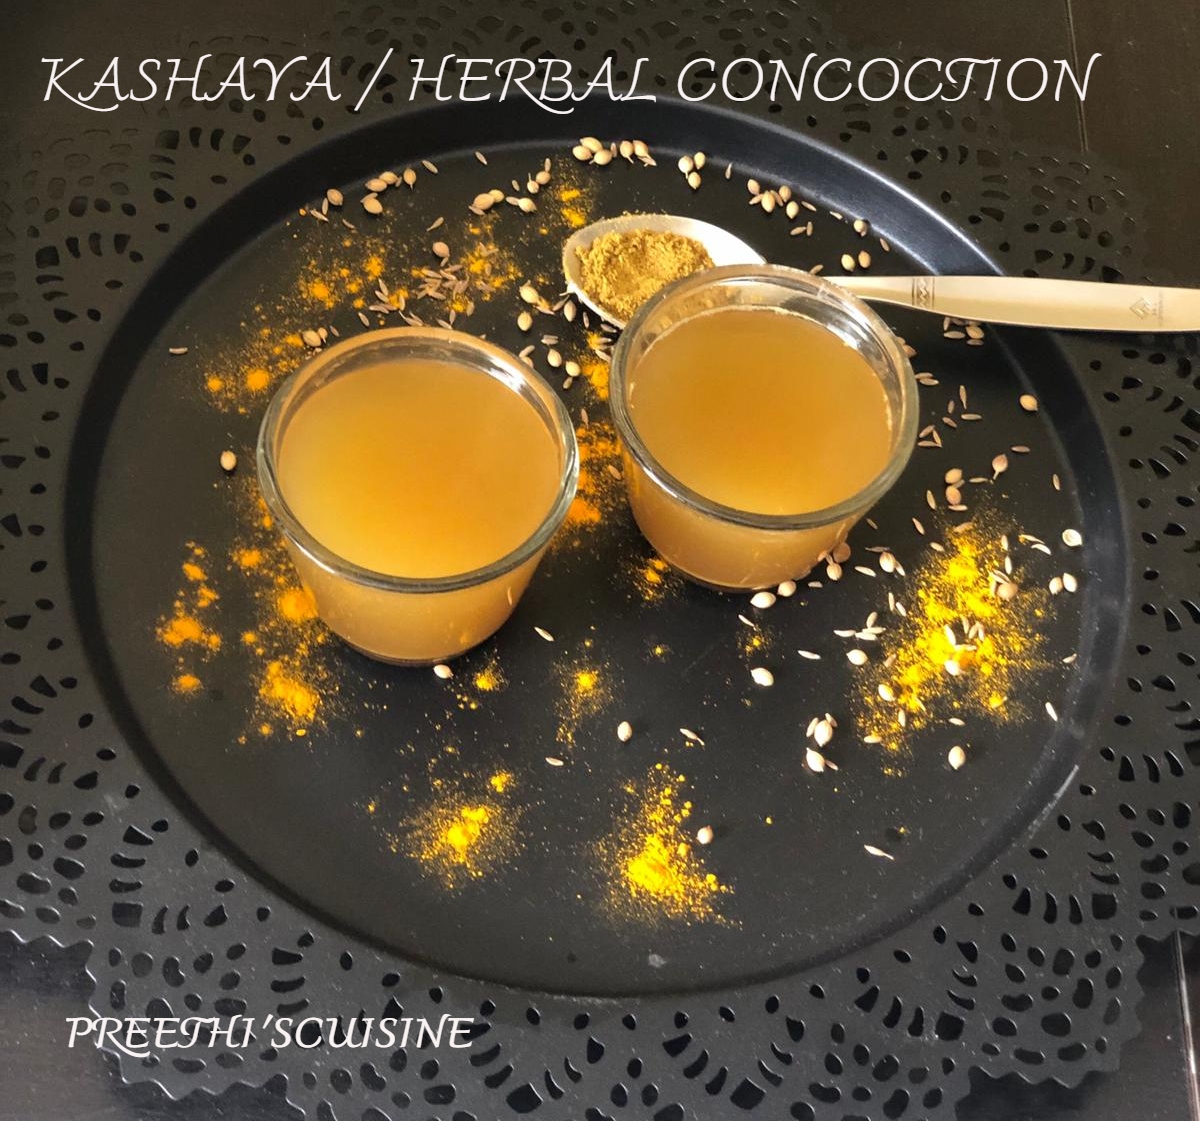 KASHAYA / HERBAL CONCOCTION